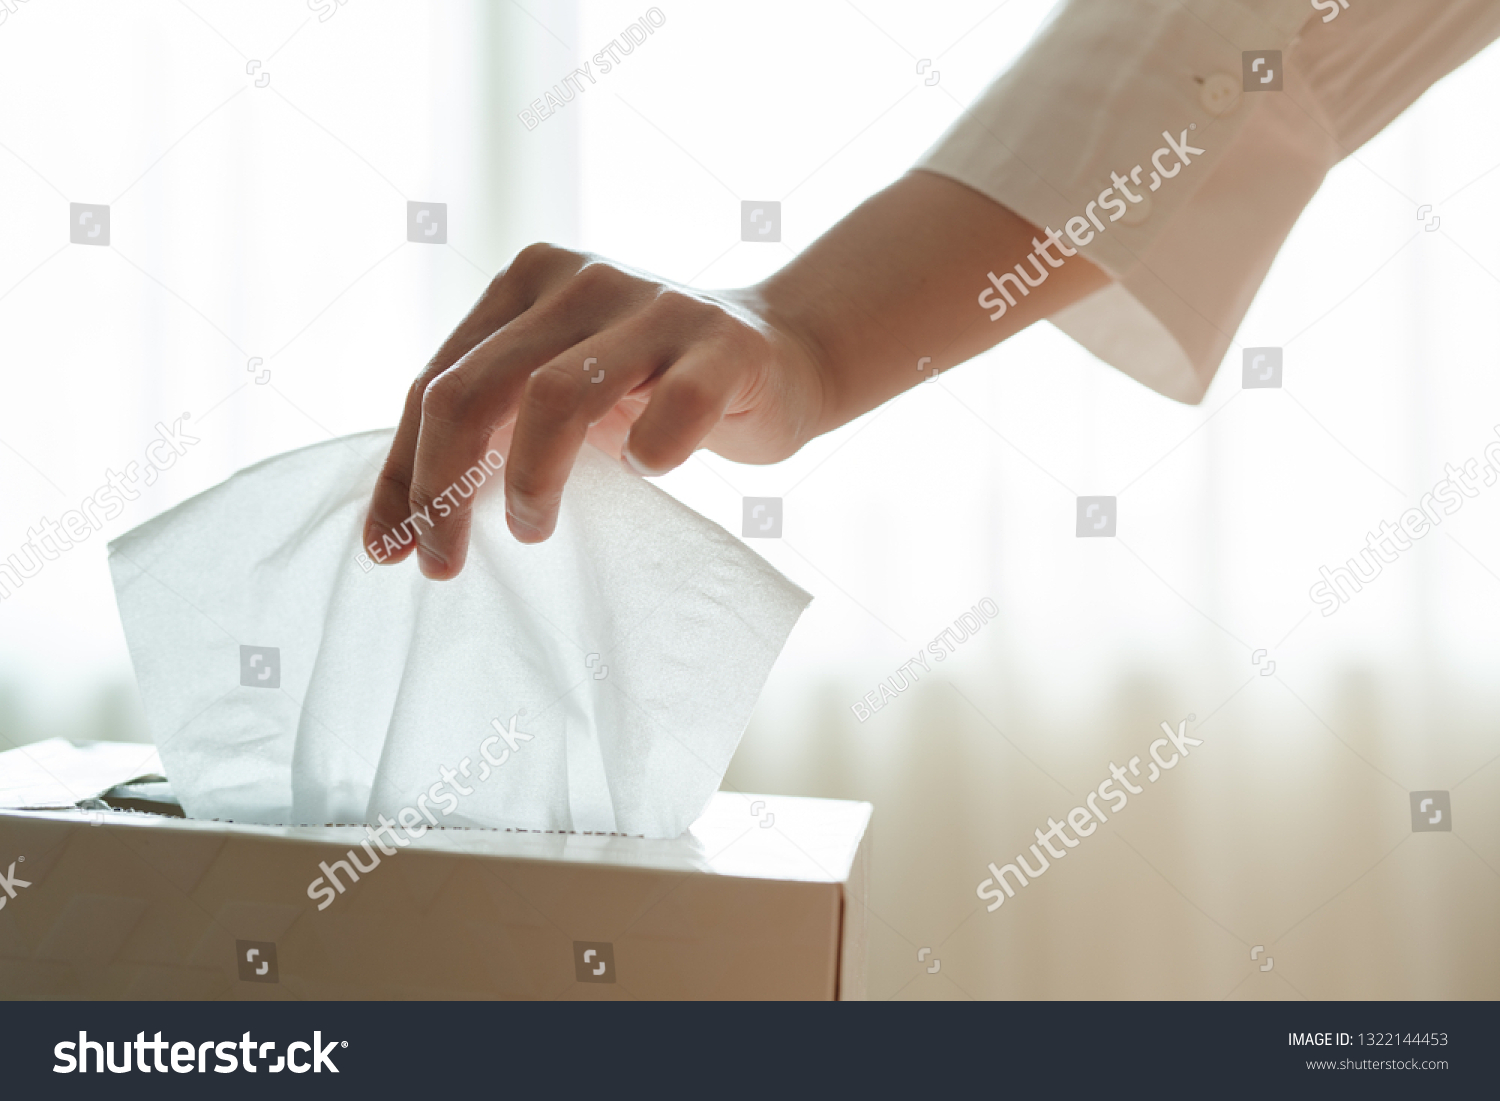 women hand picking napkin/tissue paper from the tissue box #1322144453